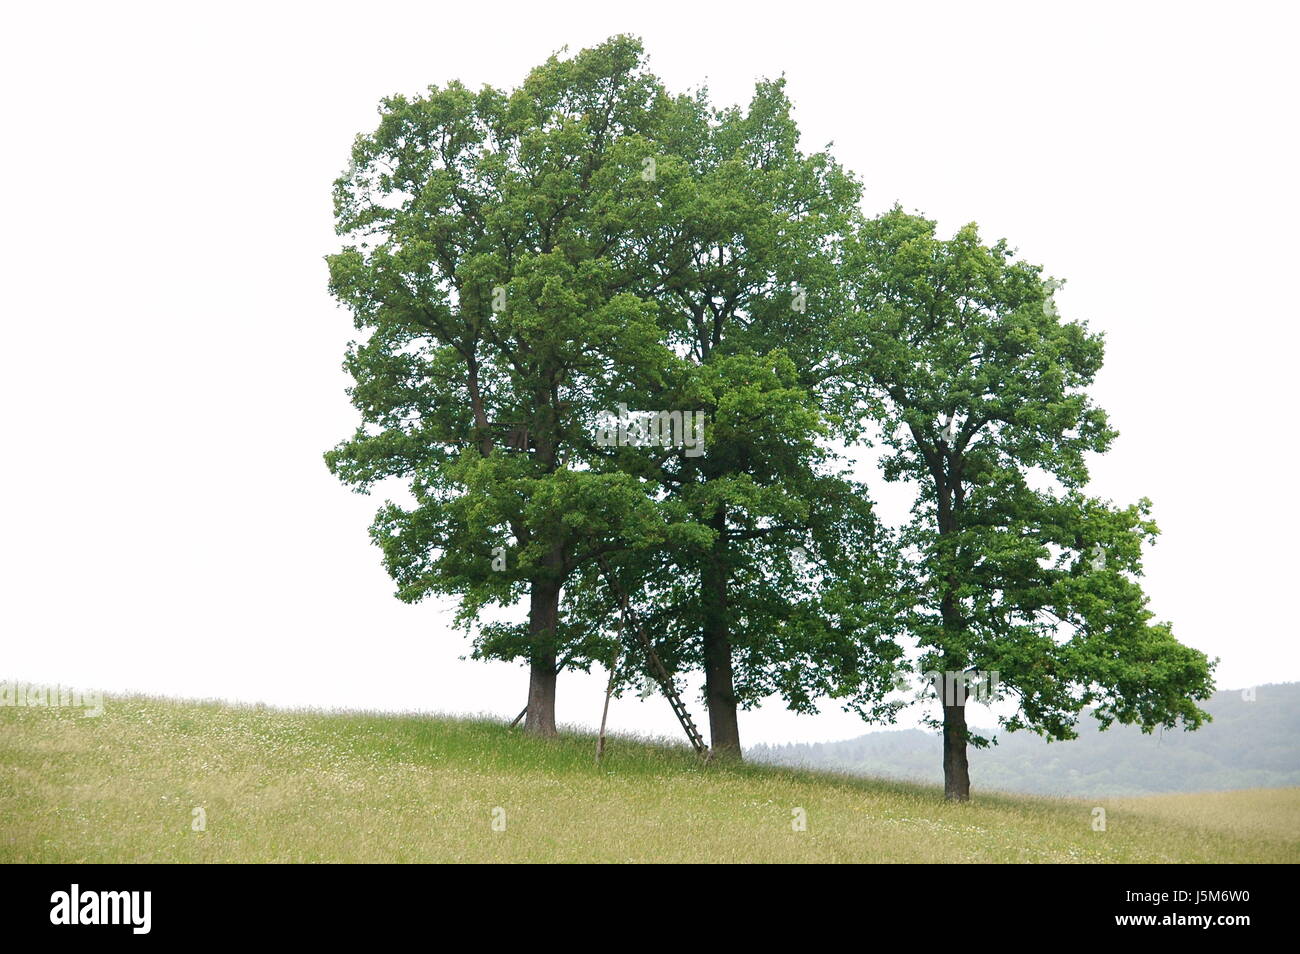 Tree, alberi lascia,Albero a foglie decidue,intrico di alberi,oak,CALIBRAZIONE,deerstand,scaletta Foto Stock